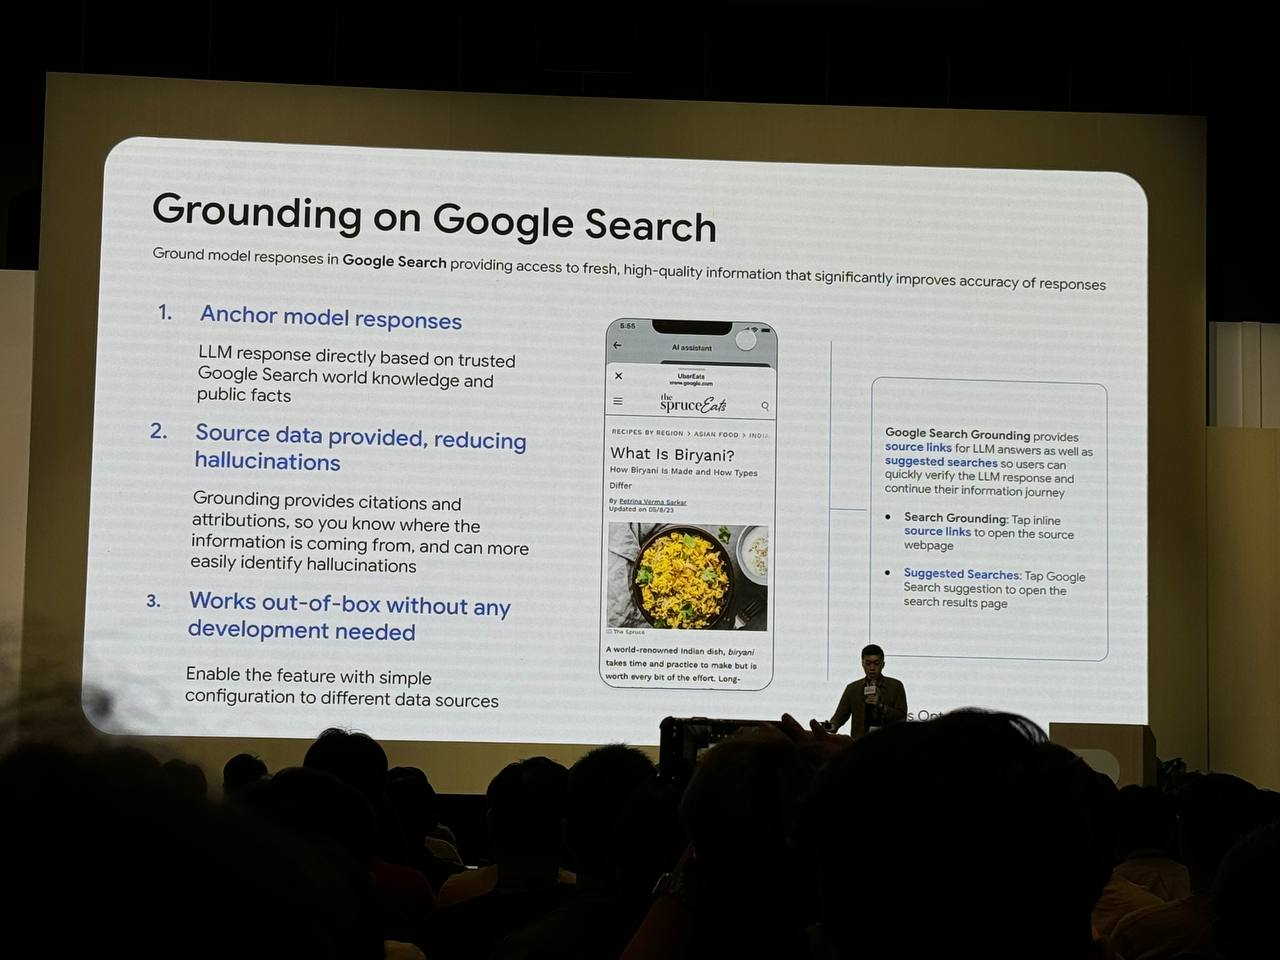 Google Search Grounding